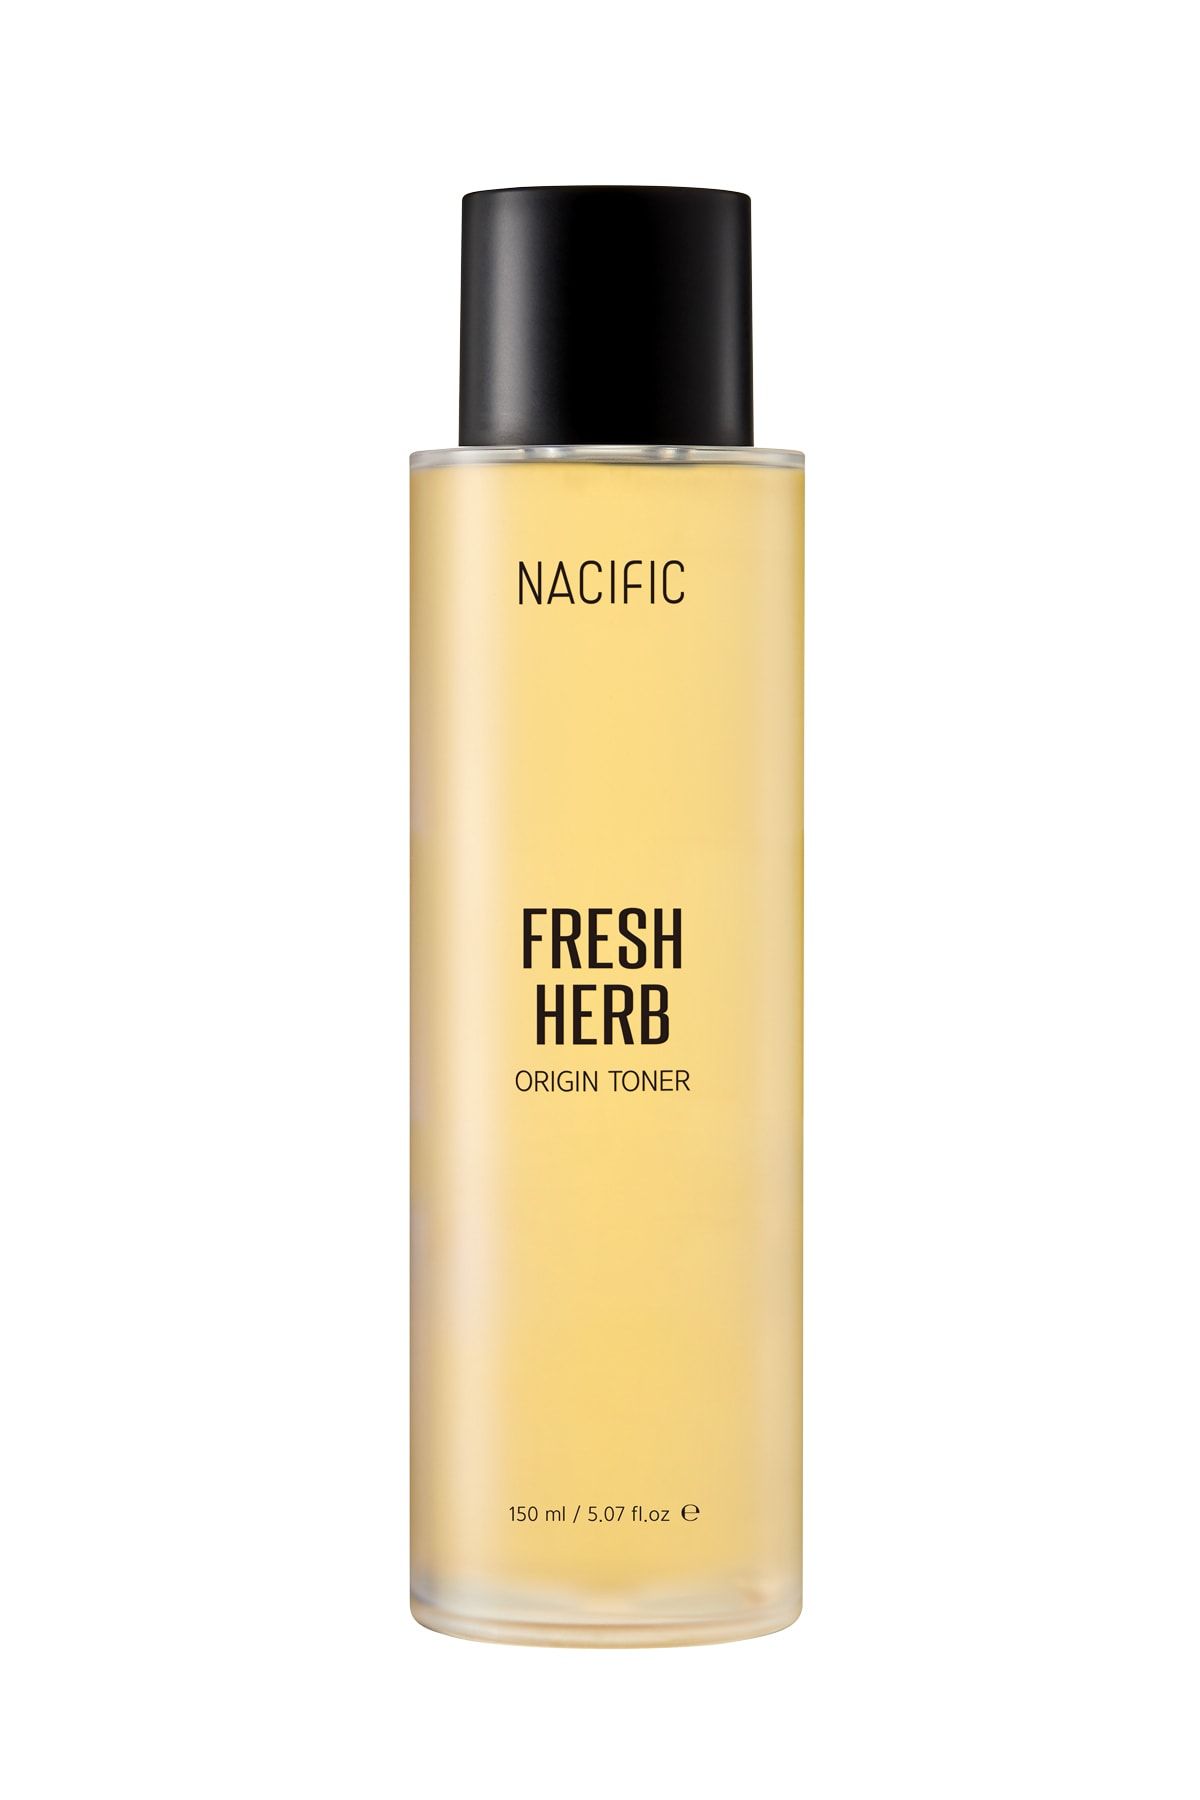 Nacific Fresh Herb Origin Toner